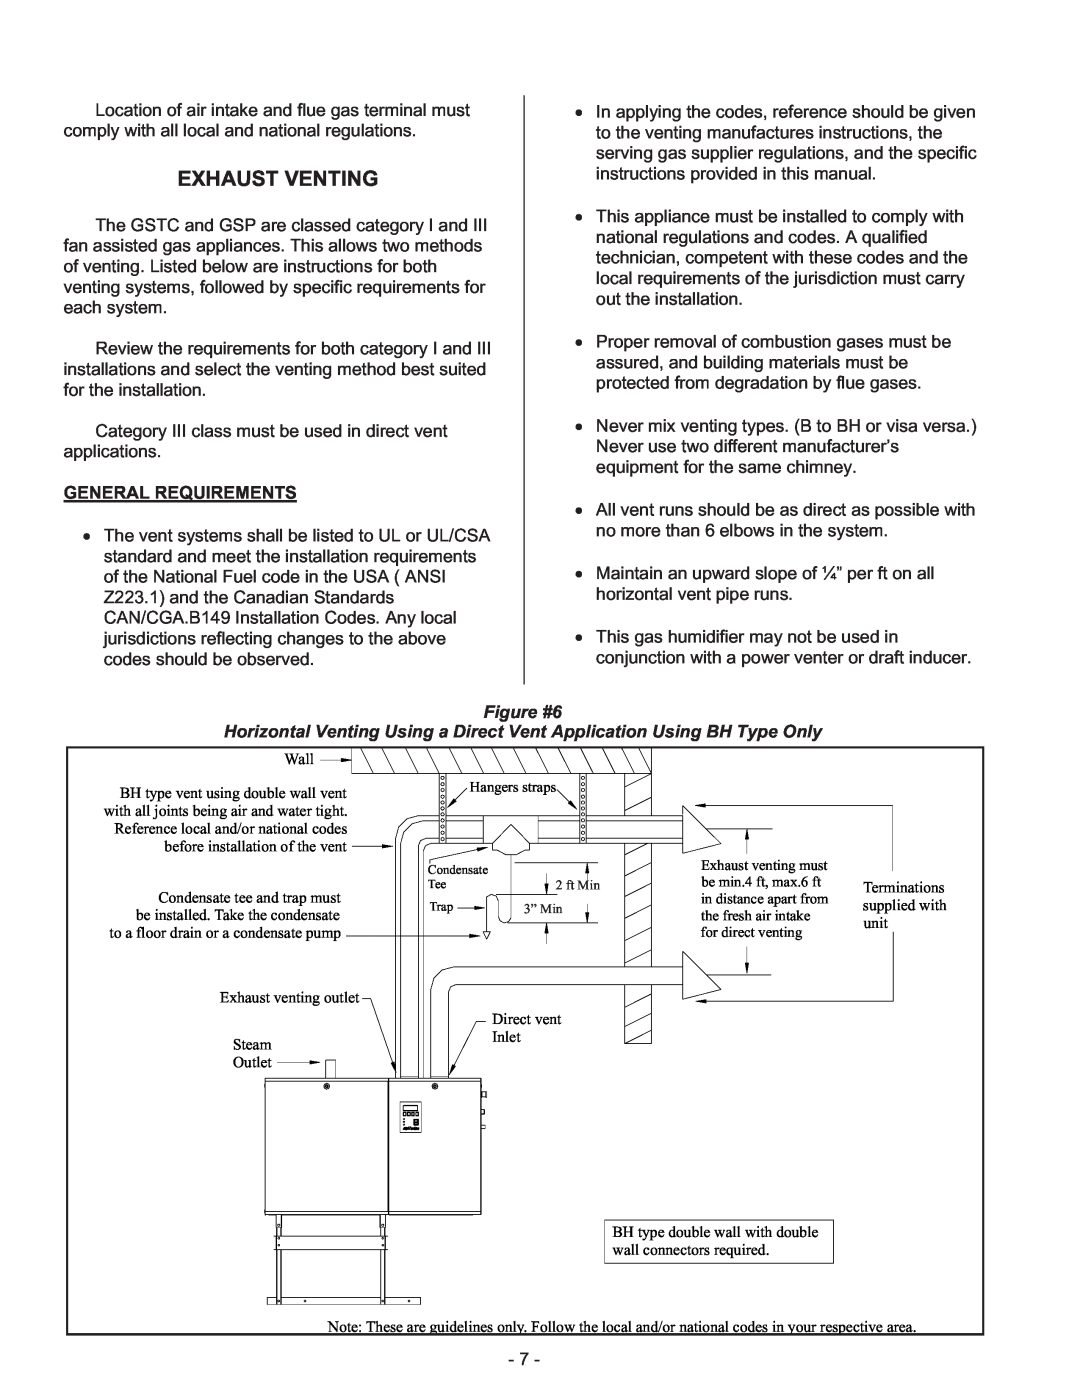 Nortec Industries GS Series manual Exhaust Venting, Figure #6 